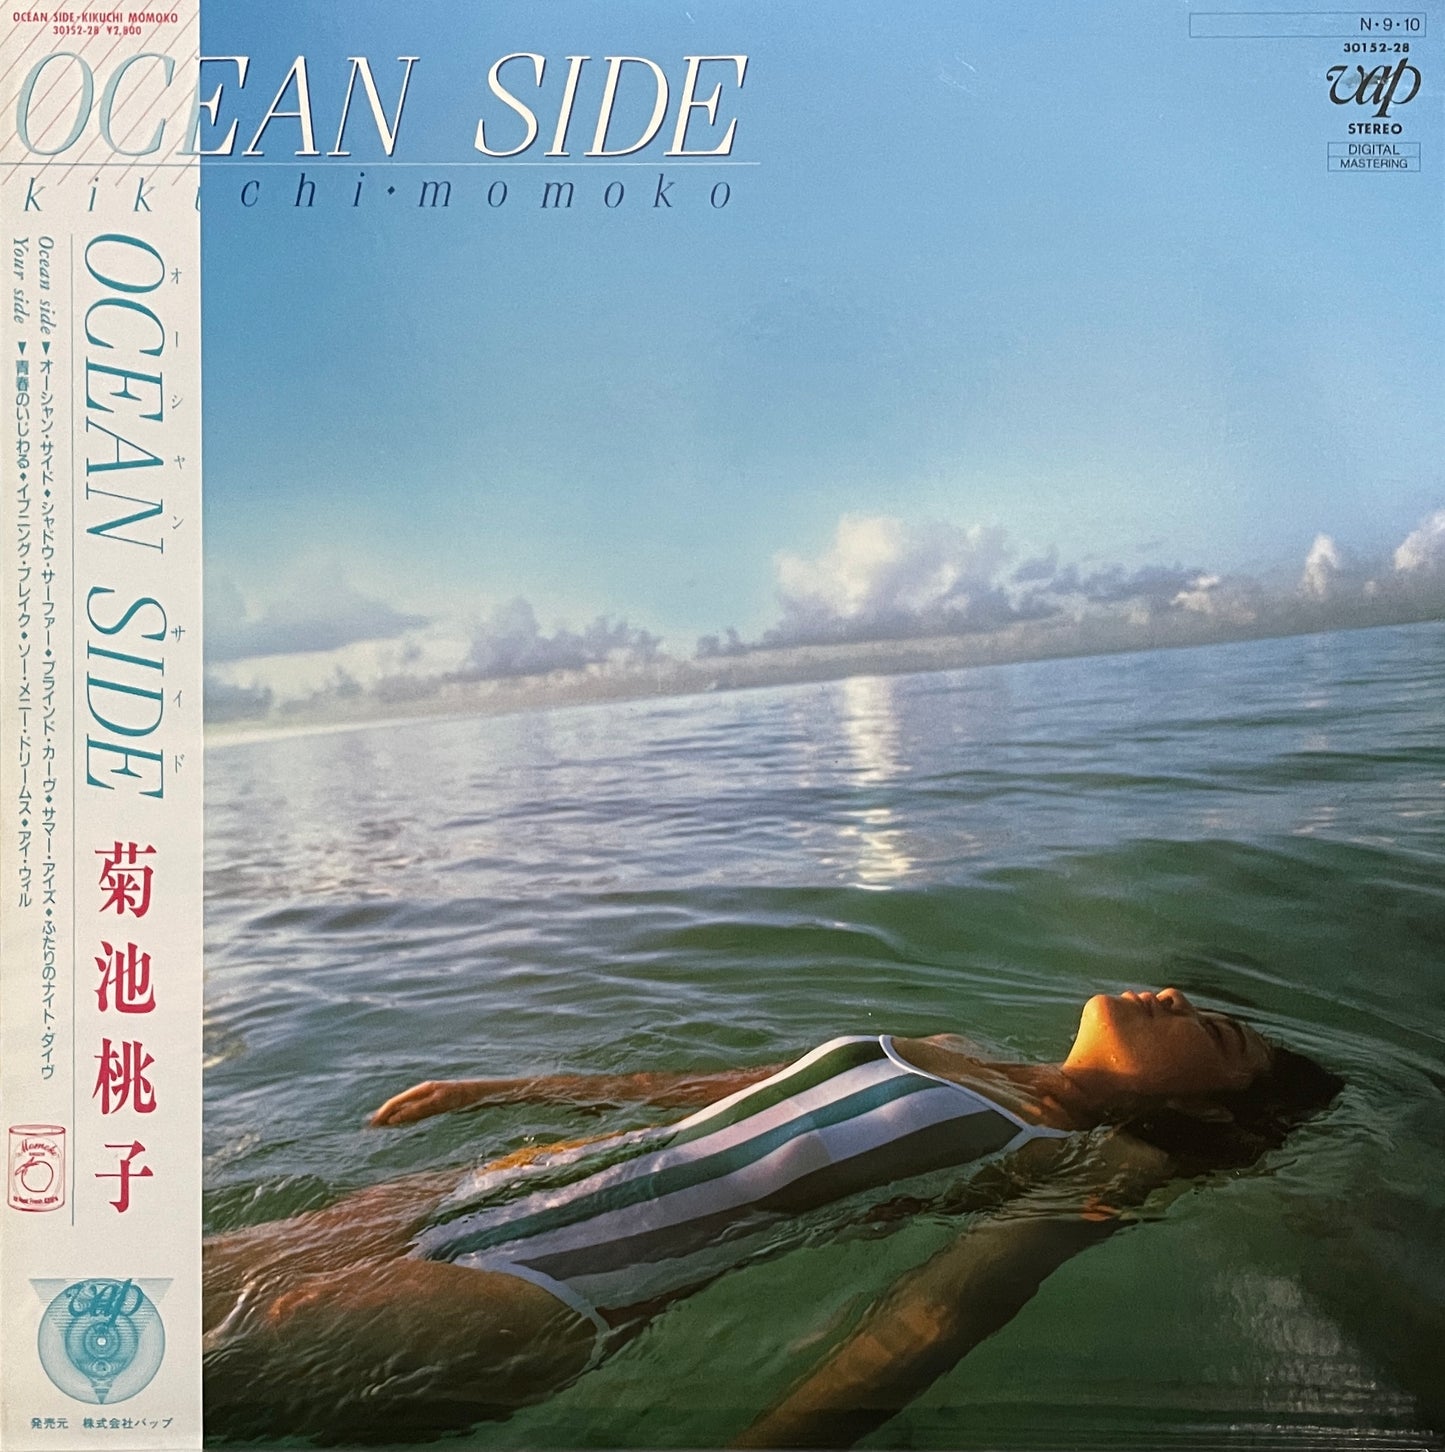 Momoko Kikuchi "Ocean Side" (1984)